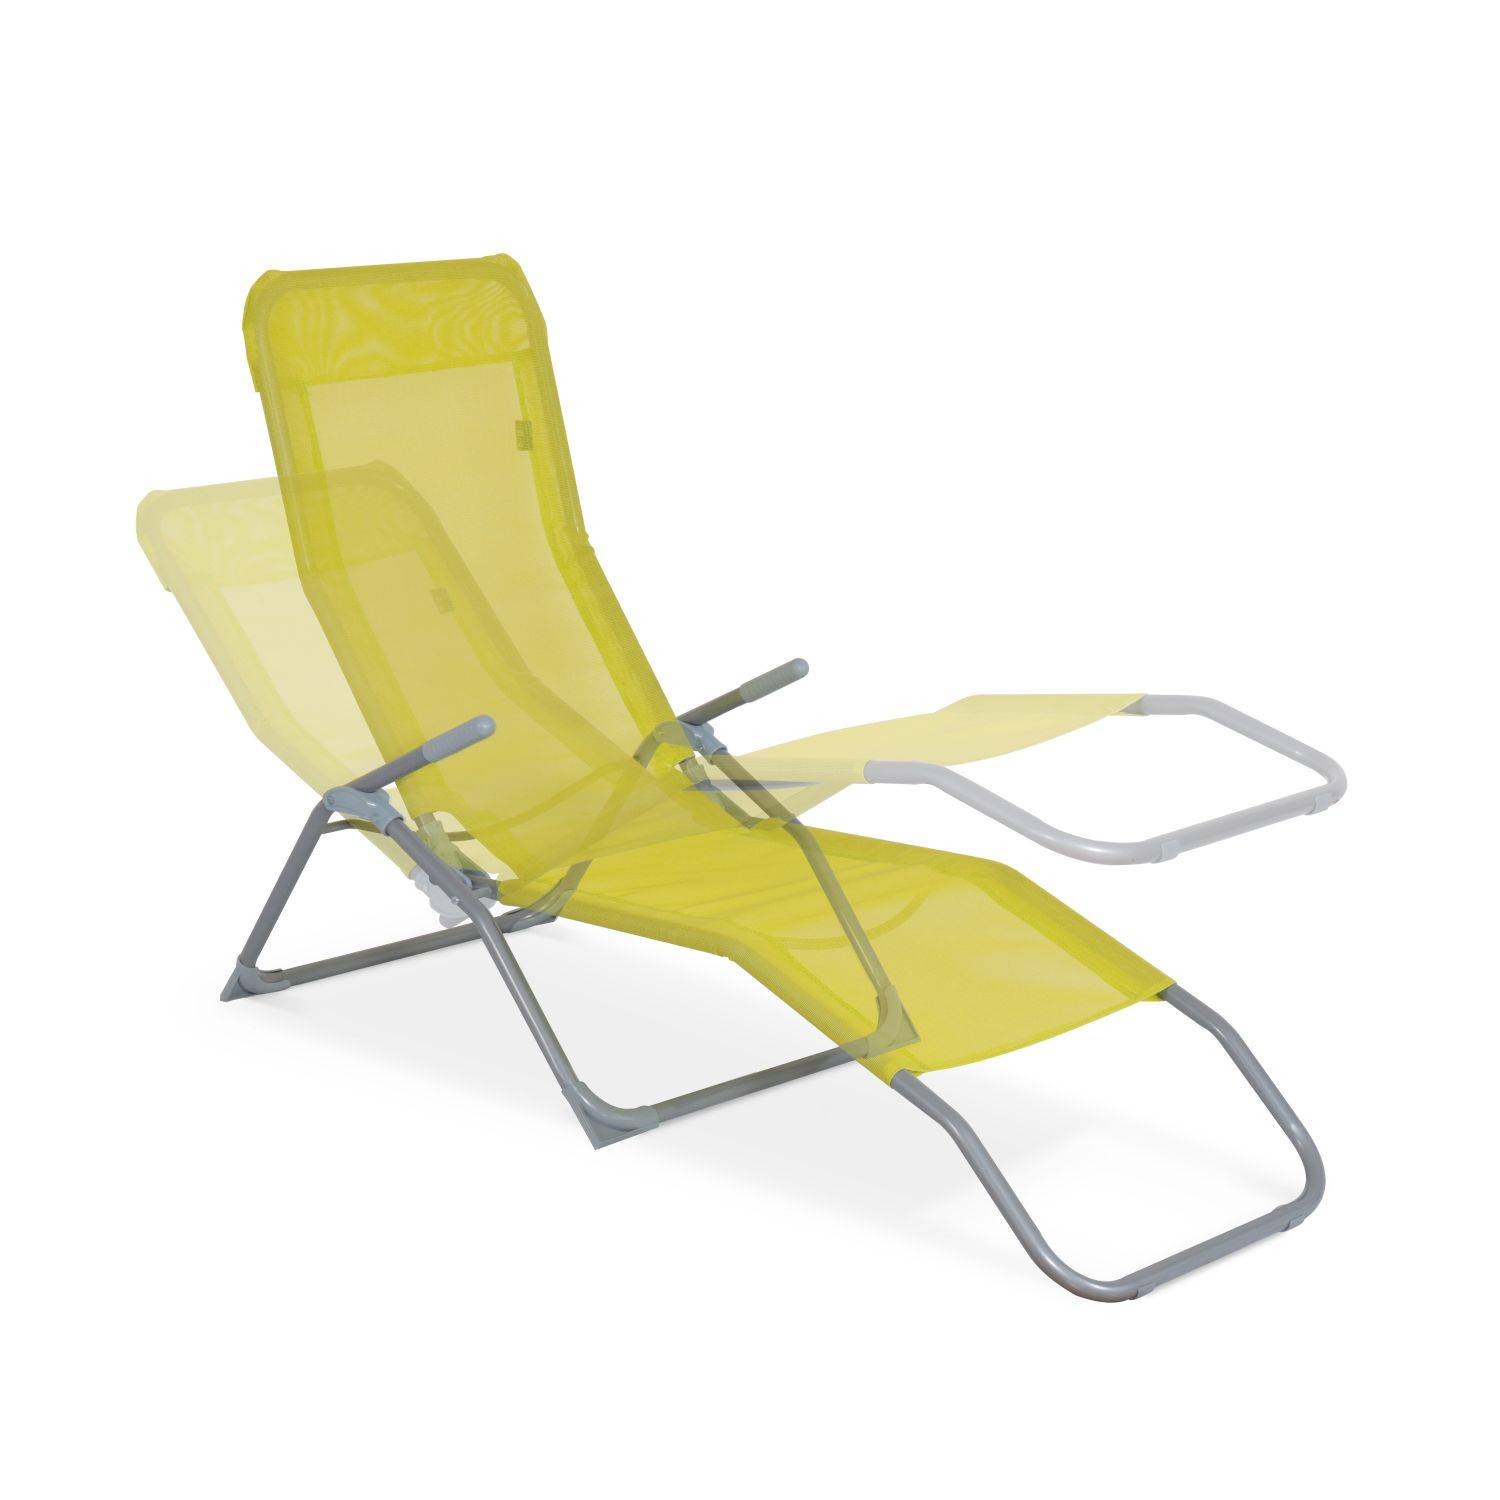 Set van 2 opvouwbare ligstoelen - Levito Anijsgroen - Ligstoelen van textileen, 2 posities, opvouwbare ligstoelen Photo3